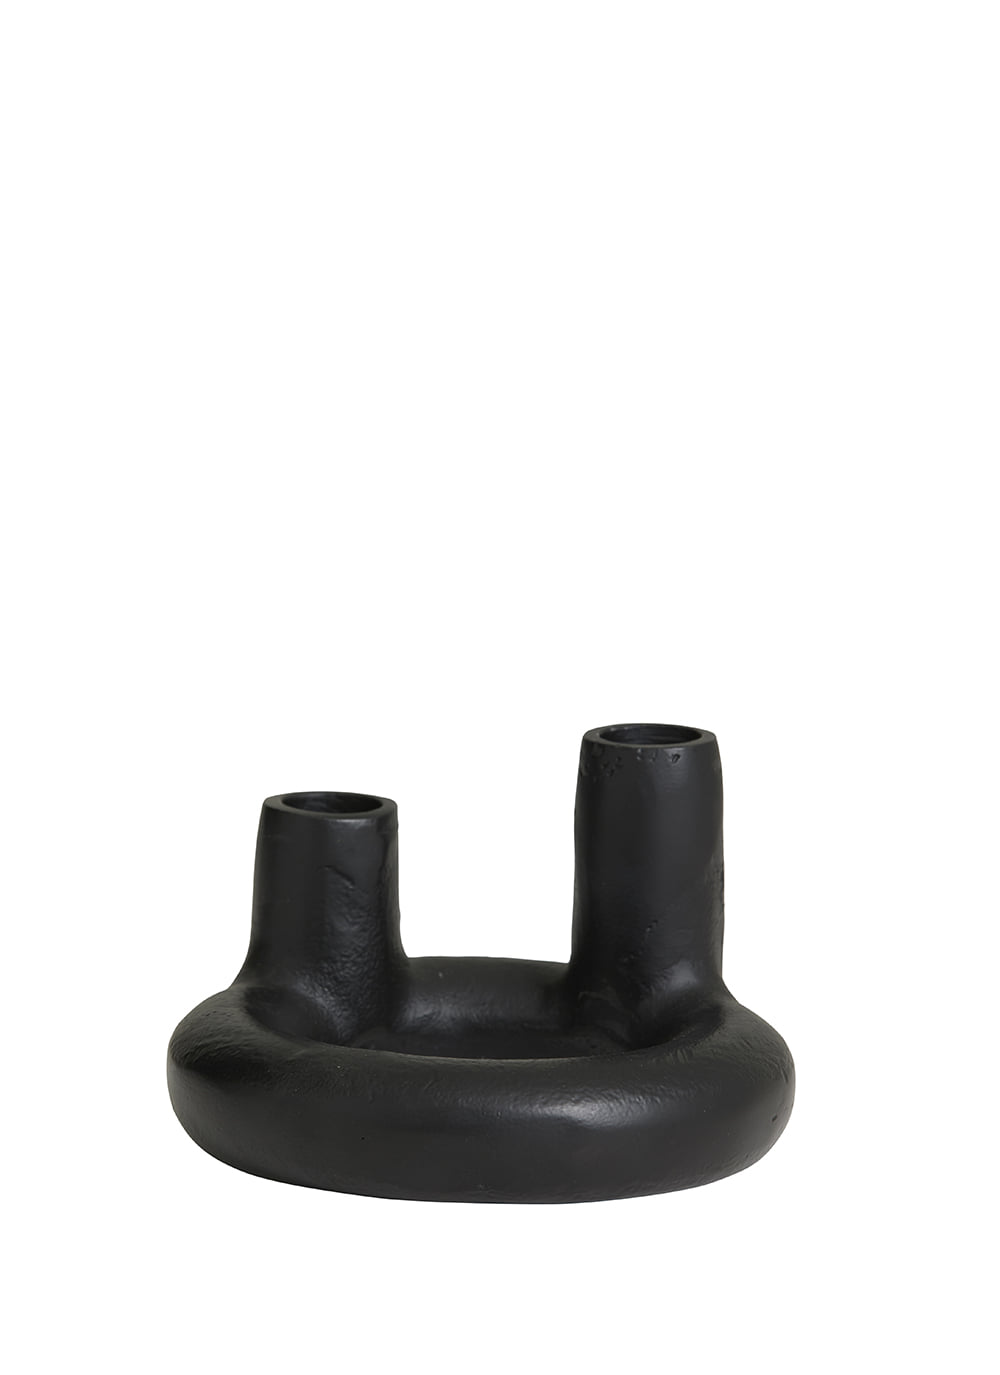 TORO candle holder, small, black